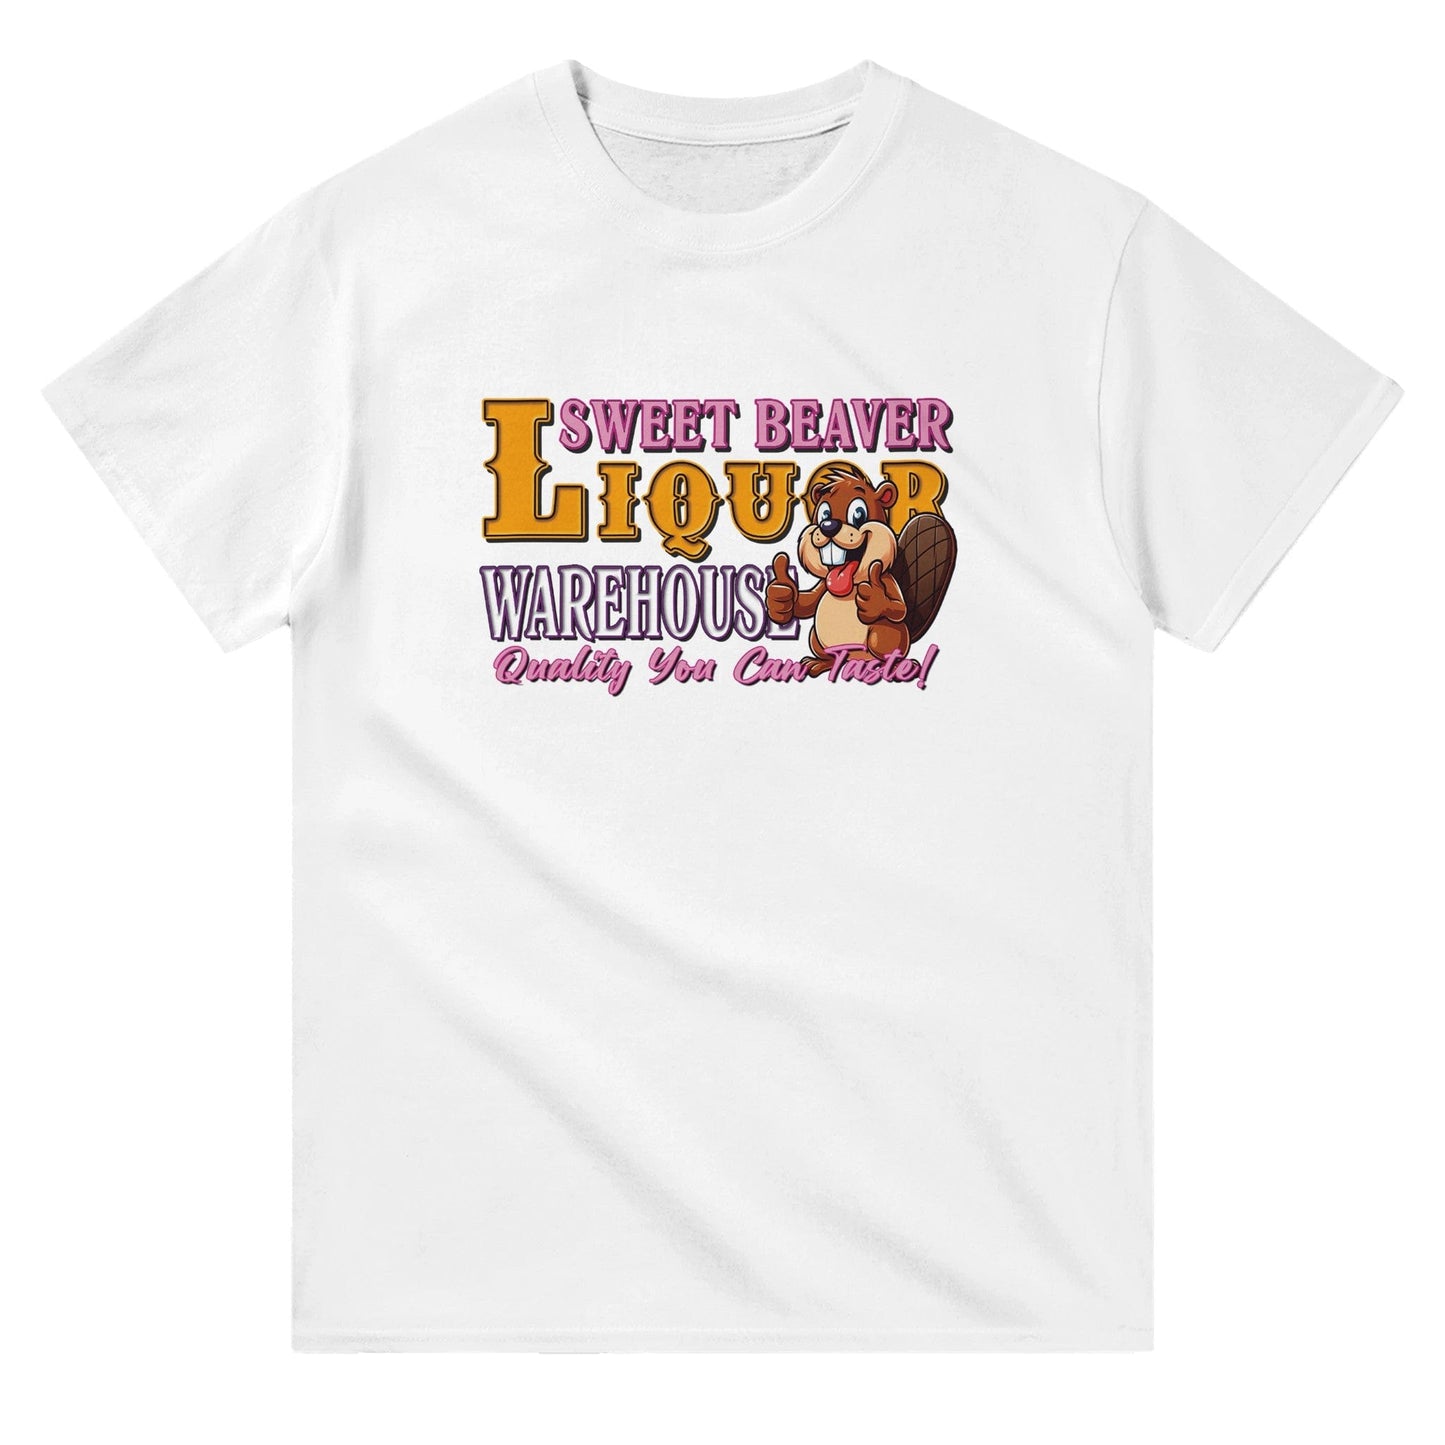 Sweet Beaver Liquor T-shirt Graphic Tee White / S BC Australia